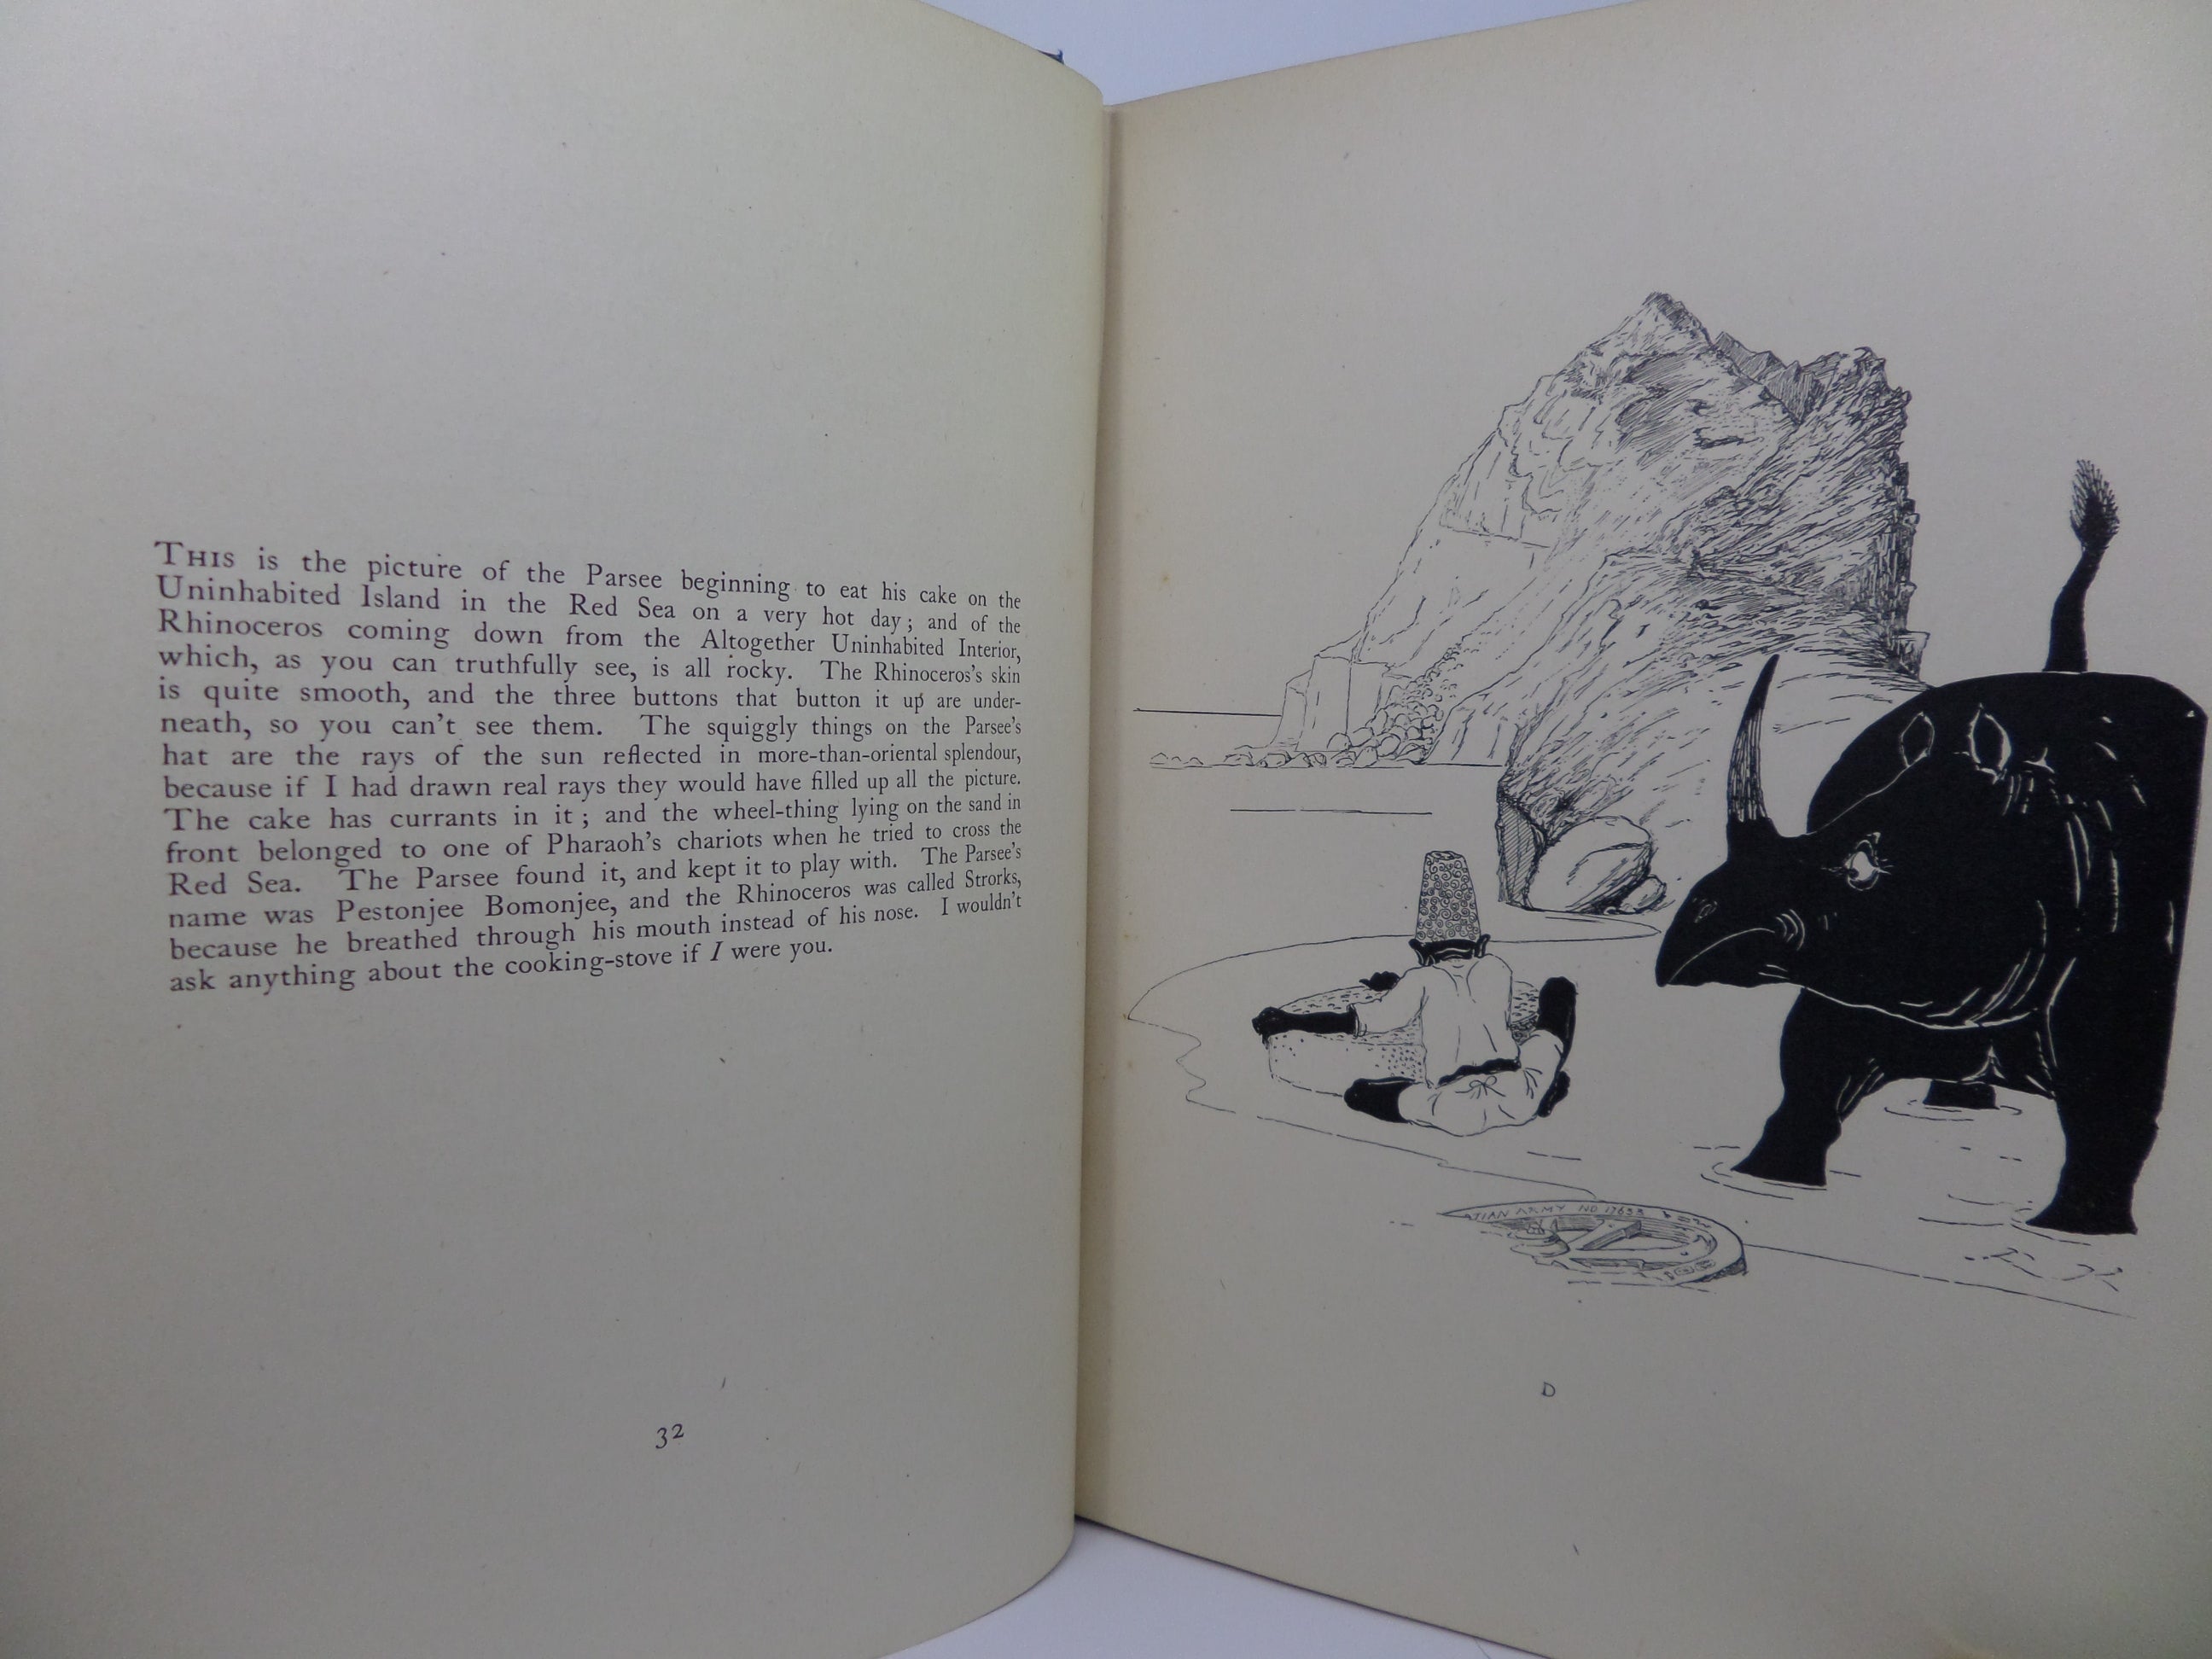 JUST SO STORIES BY RUDYARD KIPLING 1917 ILLUSTRATED BY JOSEPH M. GLEESON